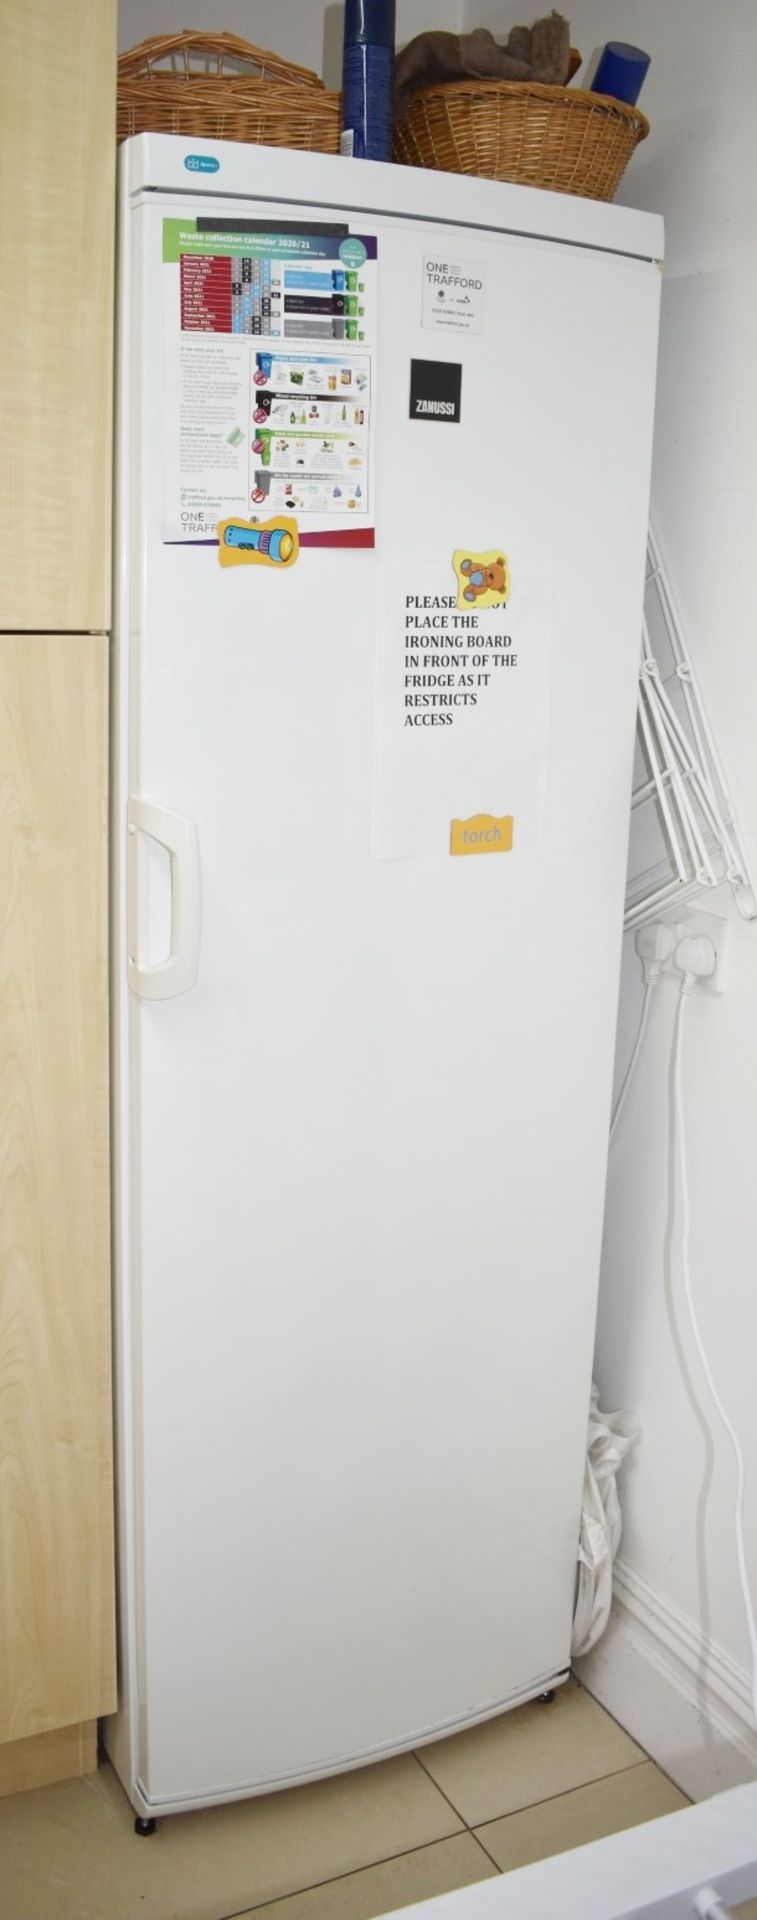 1 x Zanussi Upright Refrigerator - Dimensions: H186 x W60 x D90 cms - No VAT on the Hammer - CL641 -